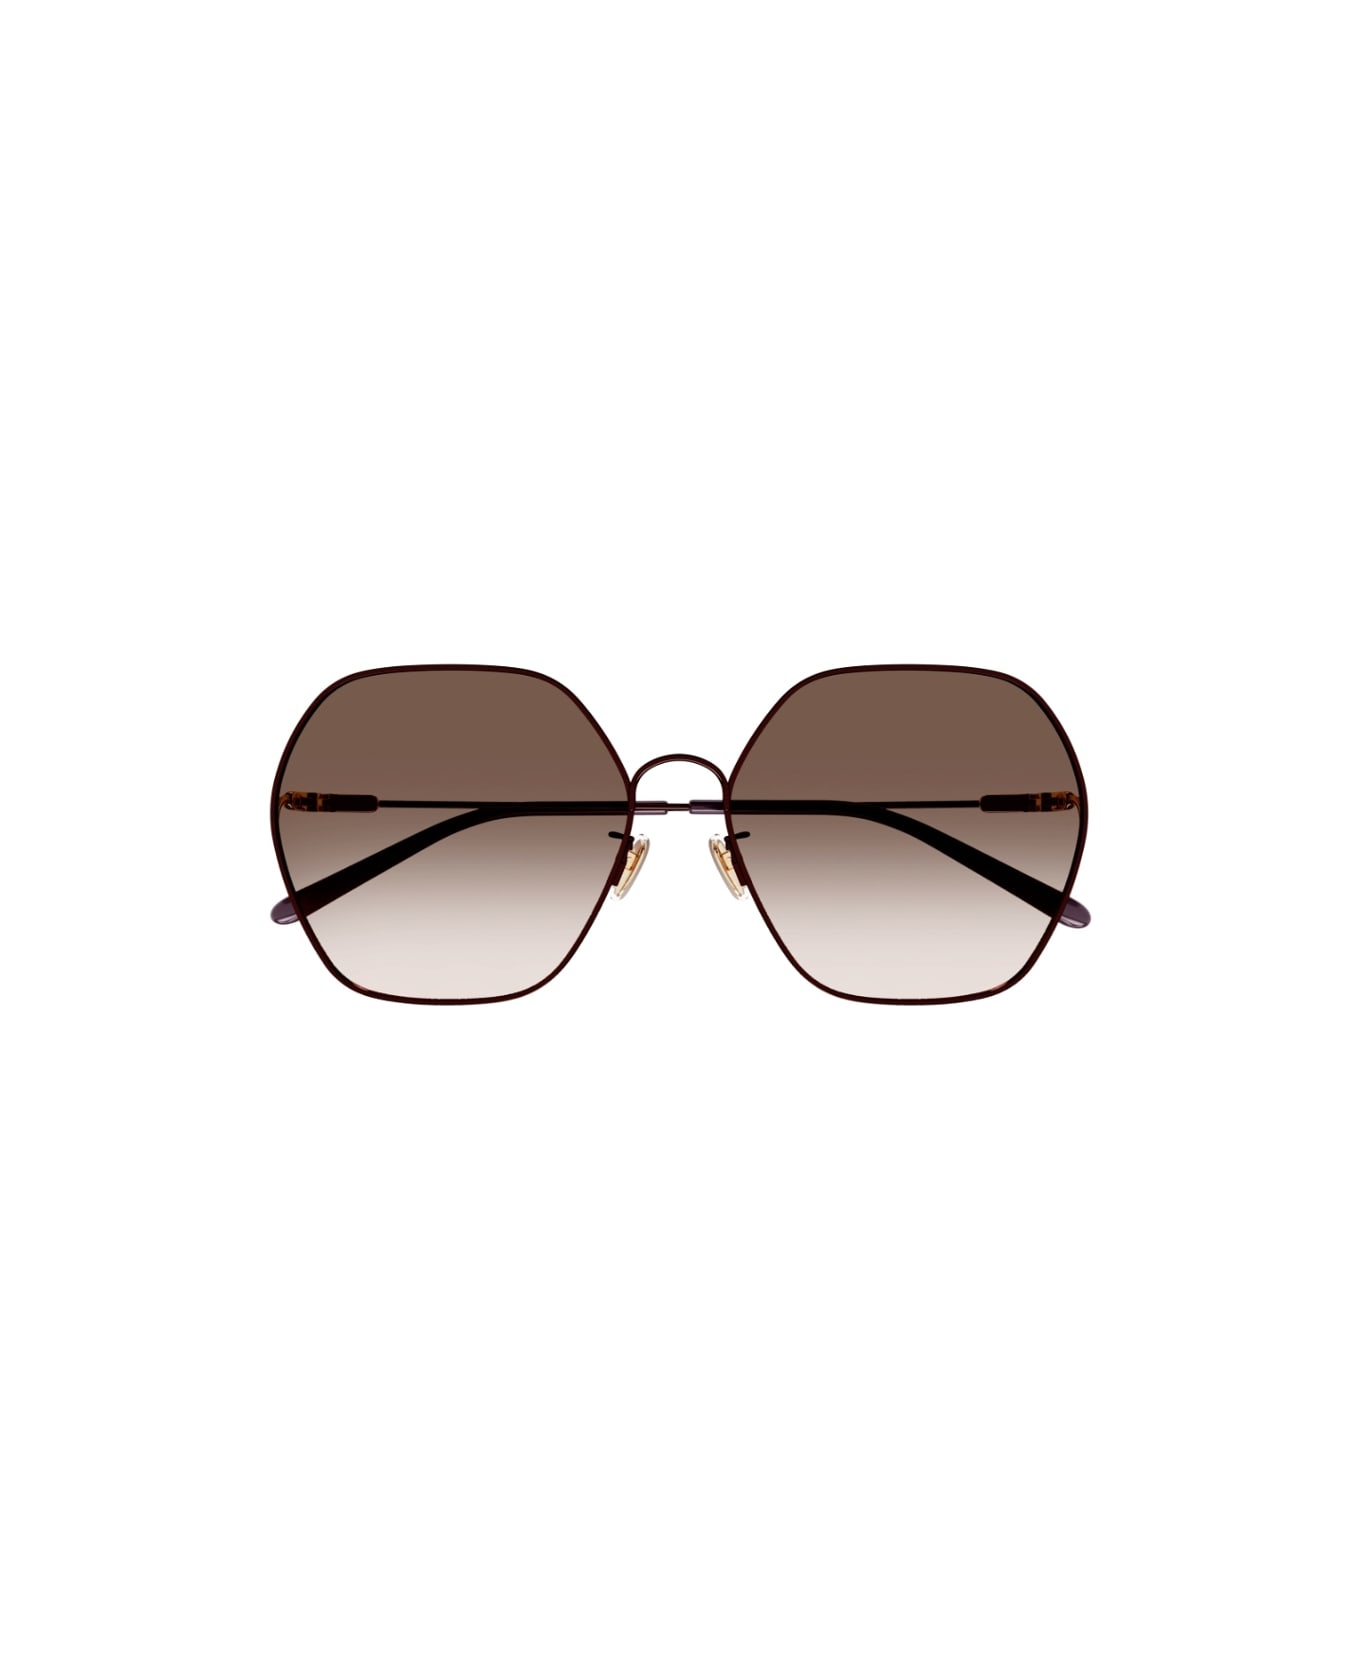 Chloé Eyewear CH0169s 003 Sunglasses サングラス